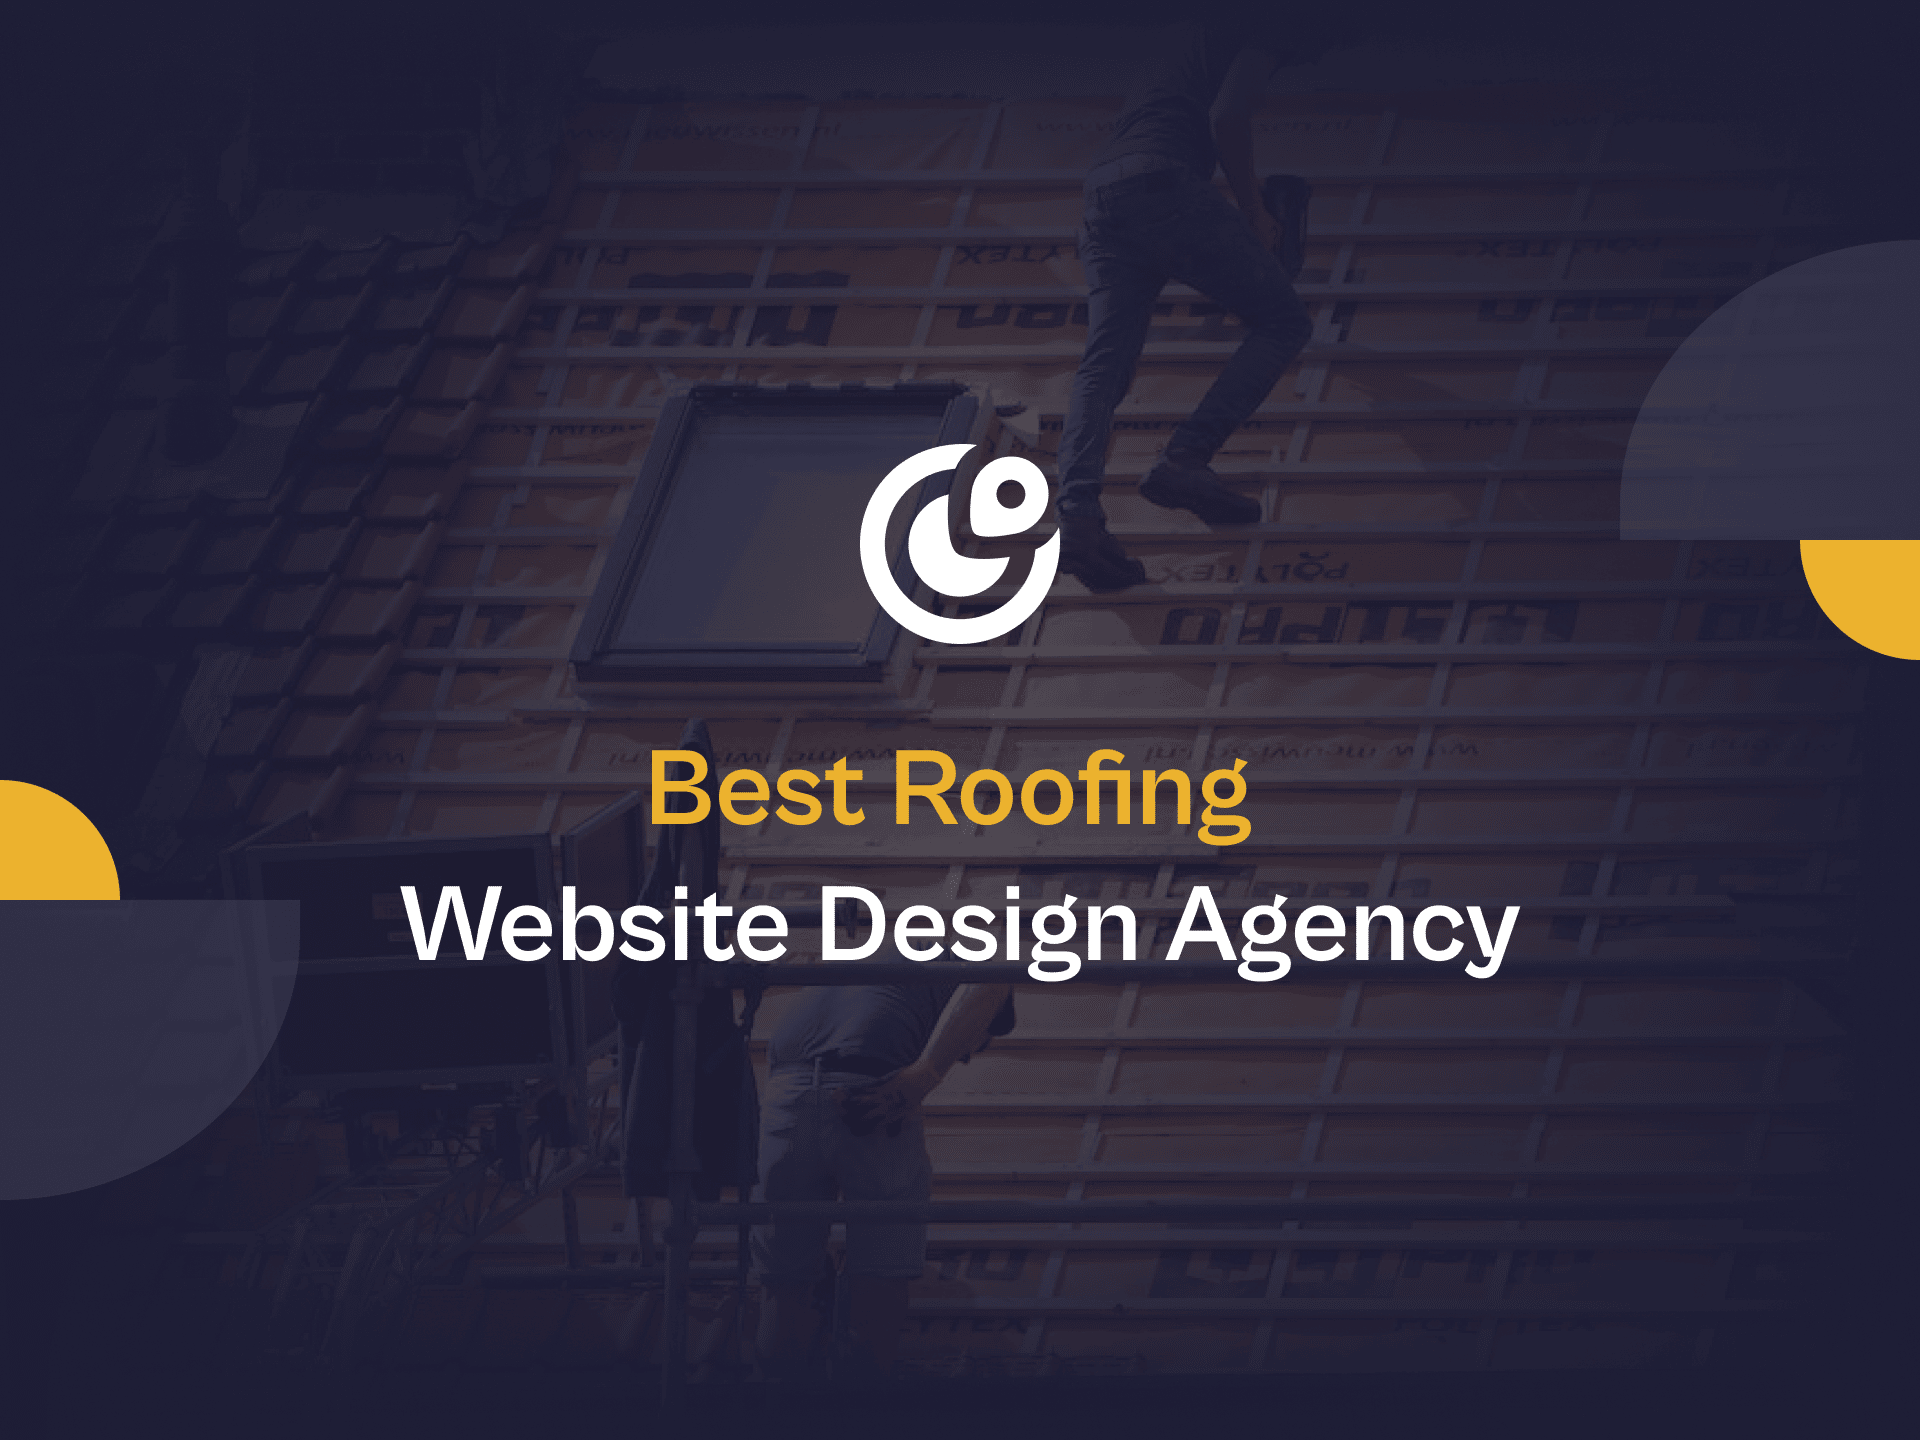 Best roofing website design agency